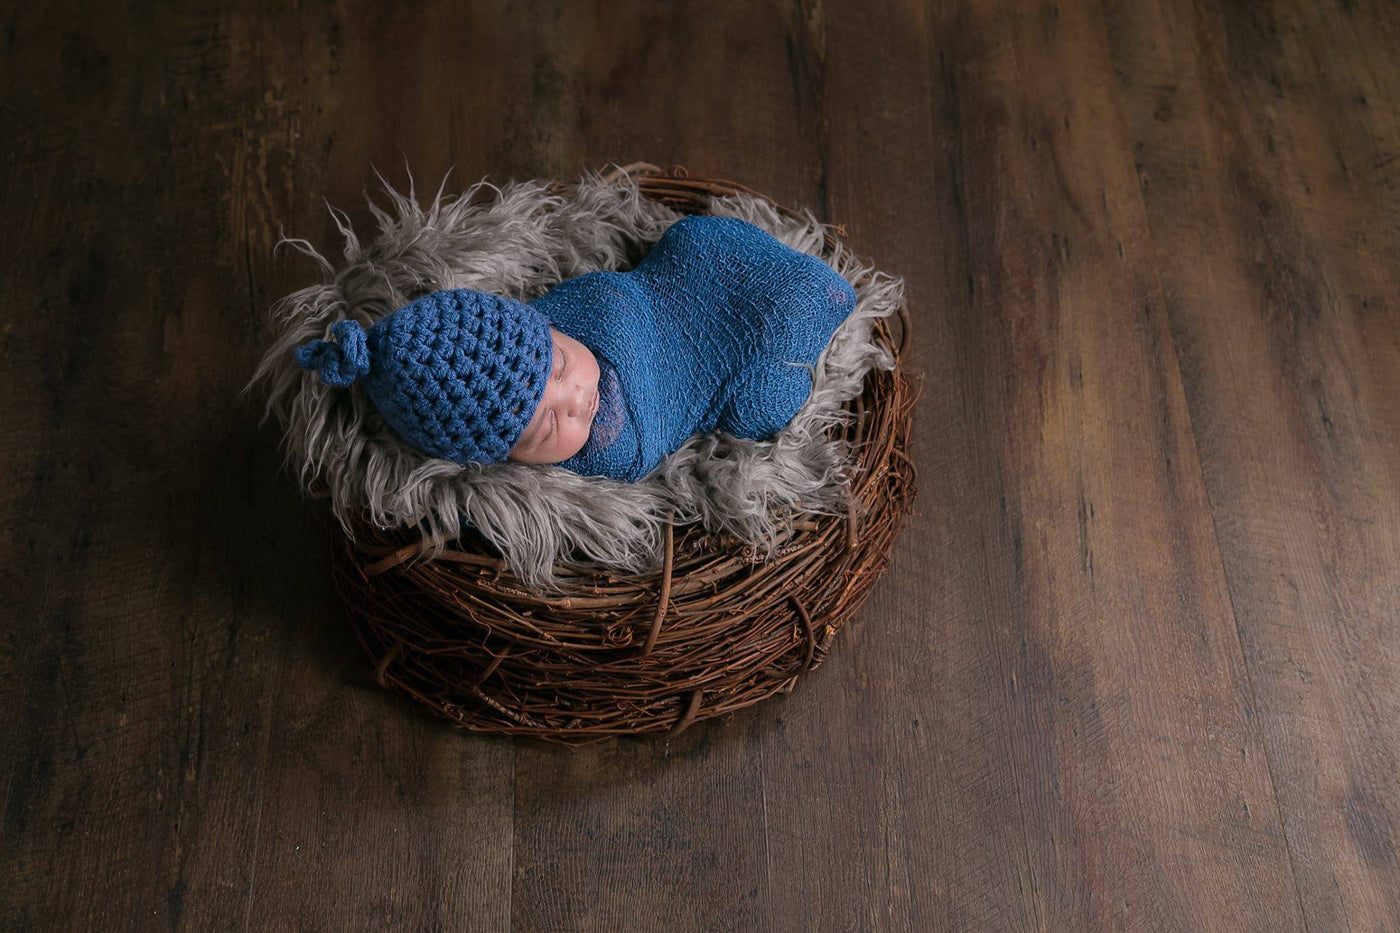 SET Wood Nest, Oyster Flokati Fur, Denim Knot Hat, Stretch Knit Wrap - Beautiful Photo Props